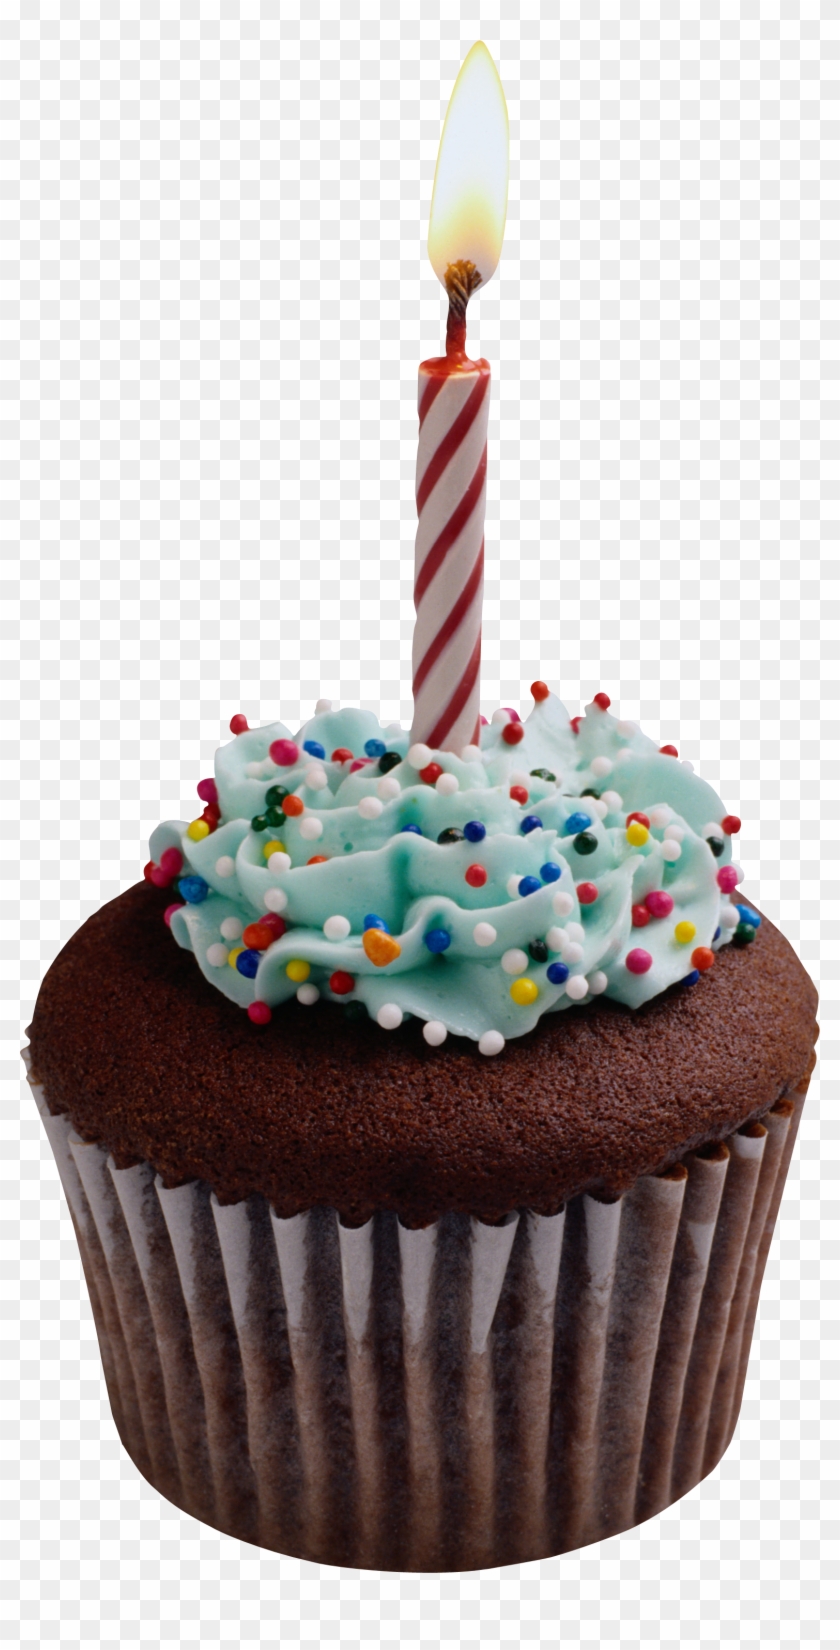 Little Cake Pastel De Chocolate, Imágenes De Cumpleaños, - Buon Compleanno,  HD Png Download - 1548x2968(#5963910) - PngFind